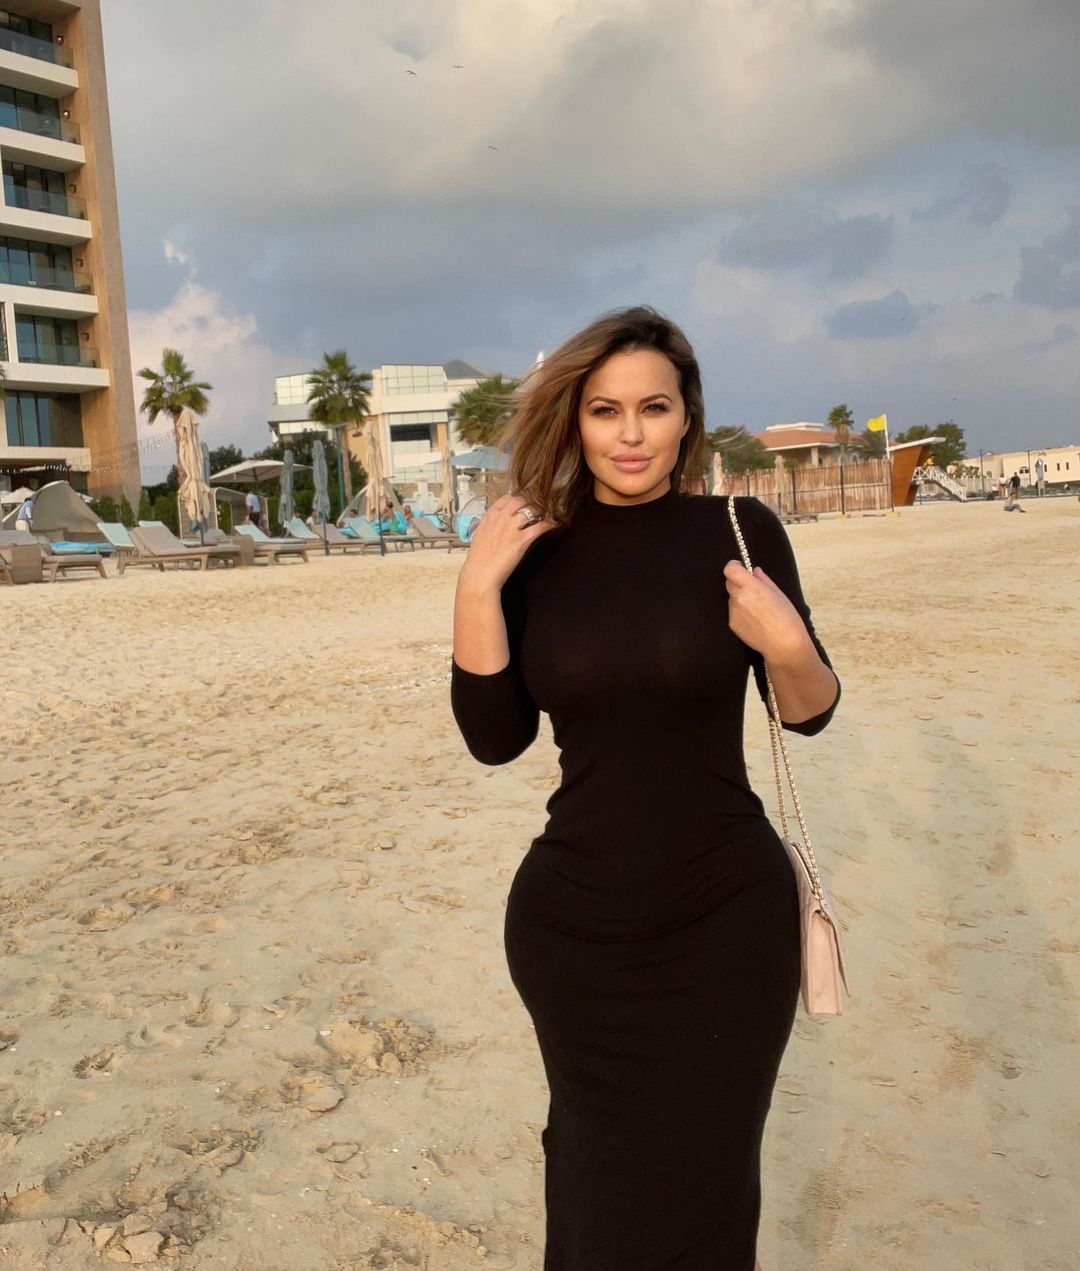 Andrea Abeli in black dress enjoying on a beach.